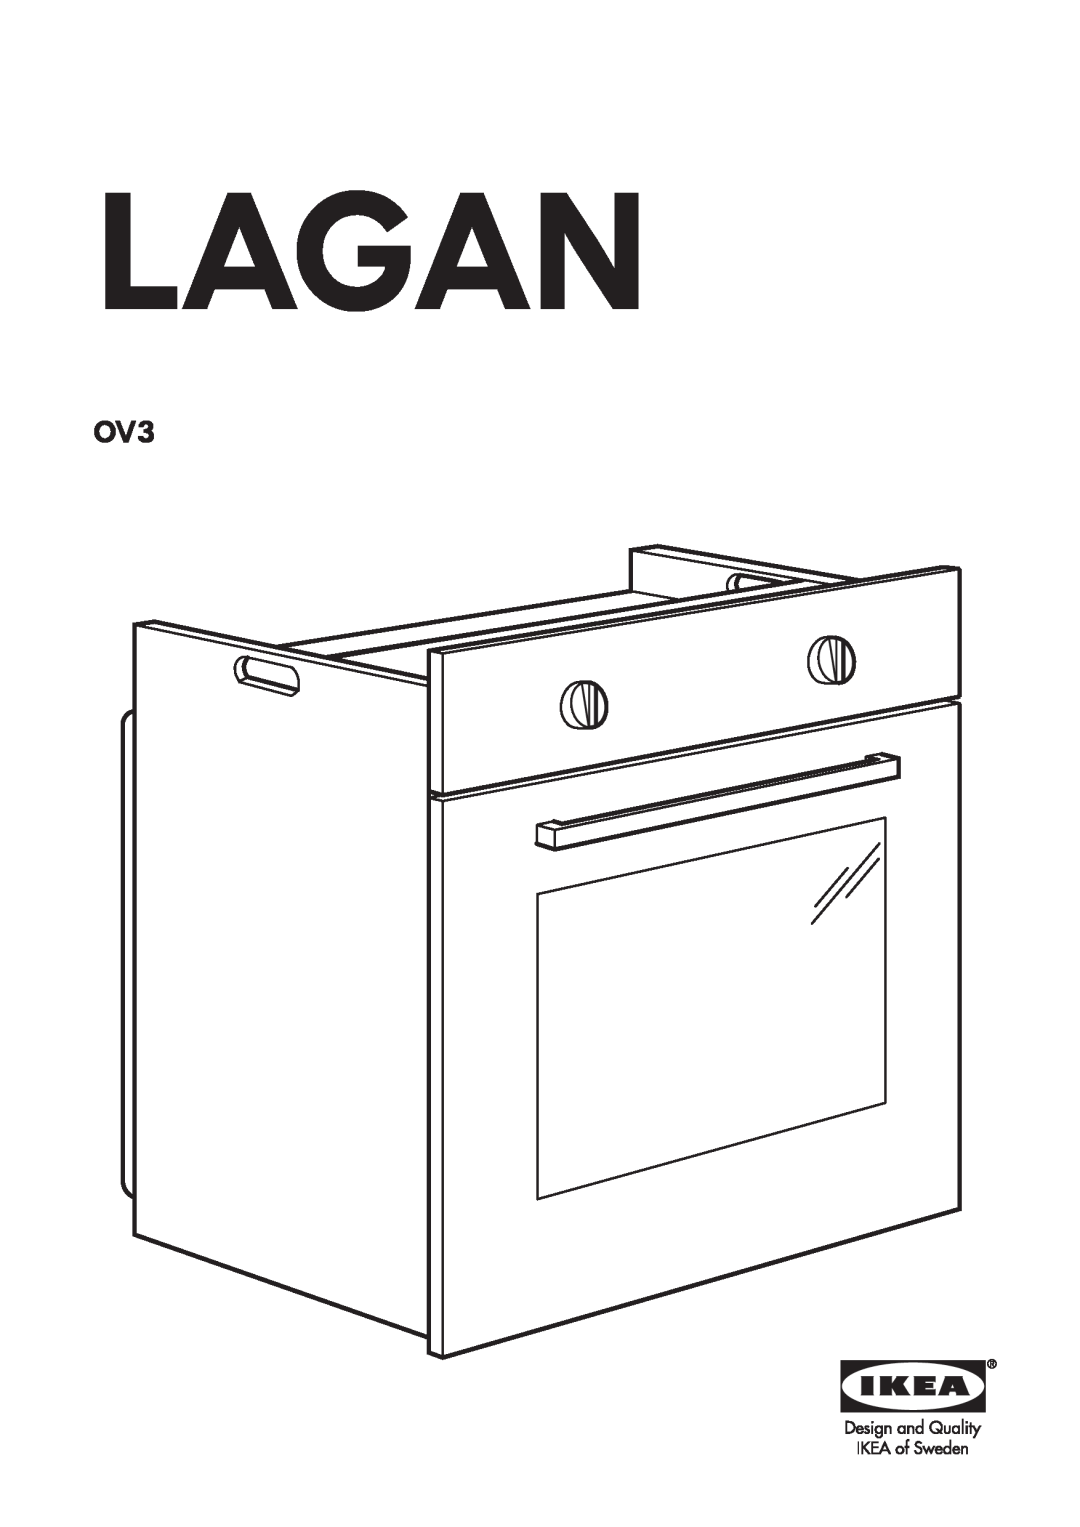 IKEA OV3 manual Lagan 